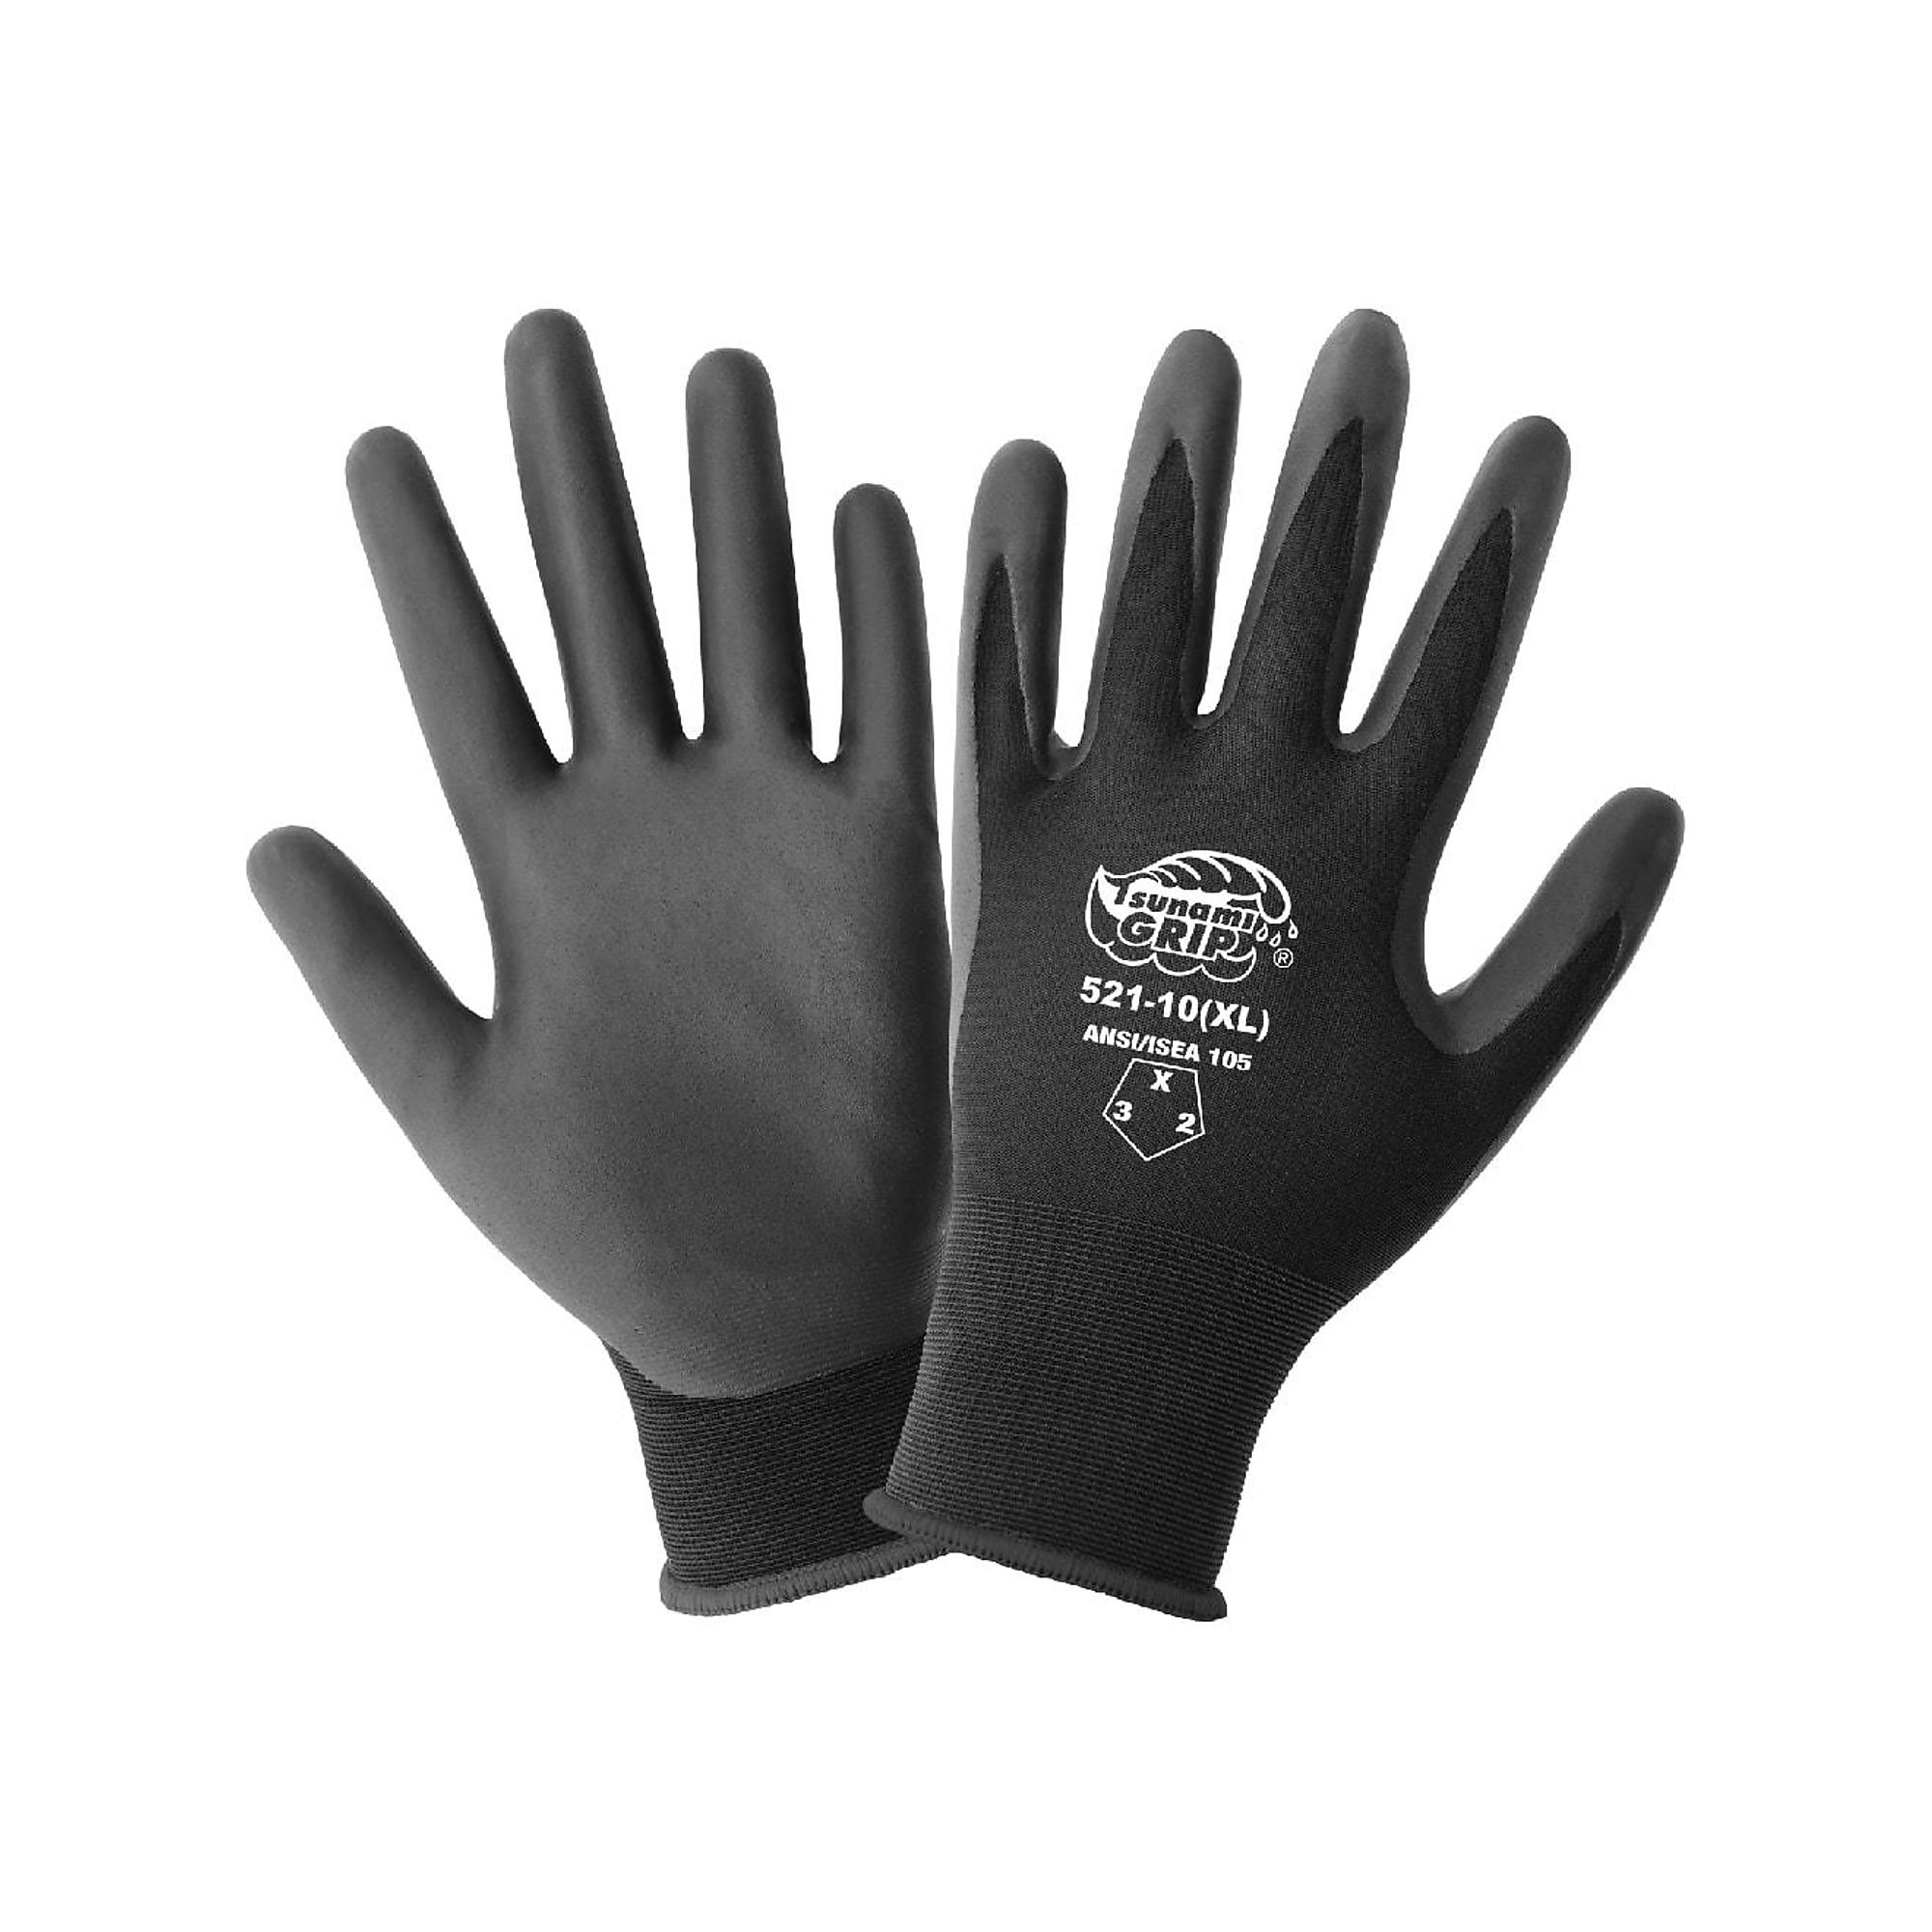 Global Glove Tsunami Grip , Tsunami Grip FDA Nitrile Coated 21-Gauge Gloves - 12 Pairs, Size 2XL, Color Black, Included (qty.) 12 Model 521-11(2XL)